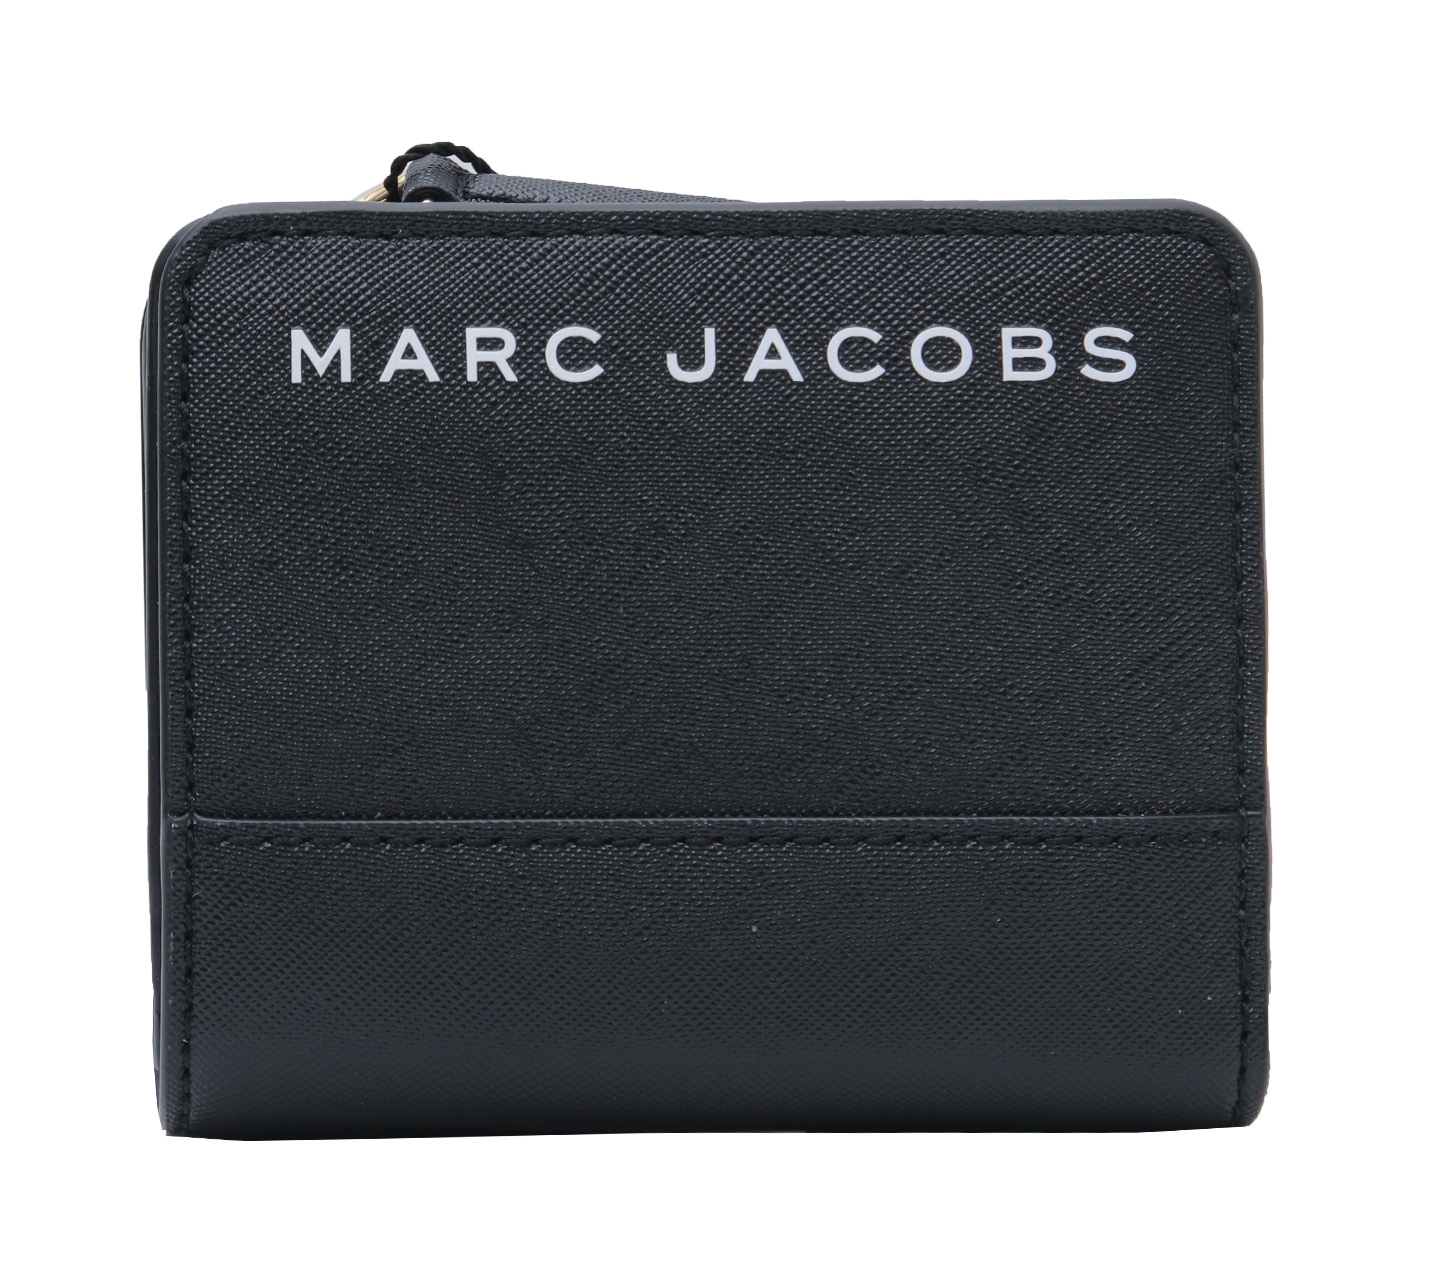 Marc jacobs Black Square Wallet